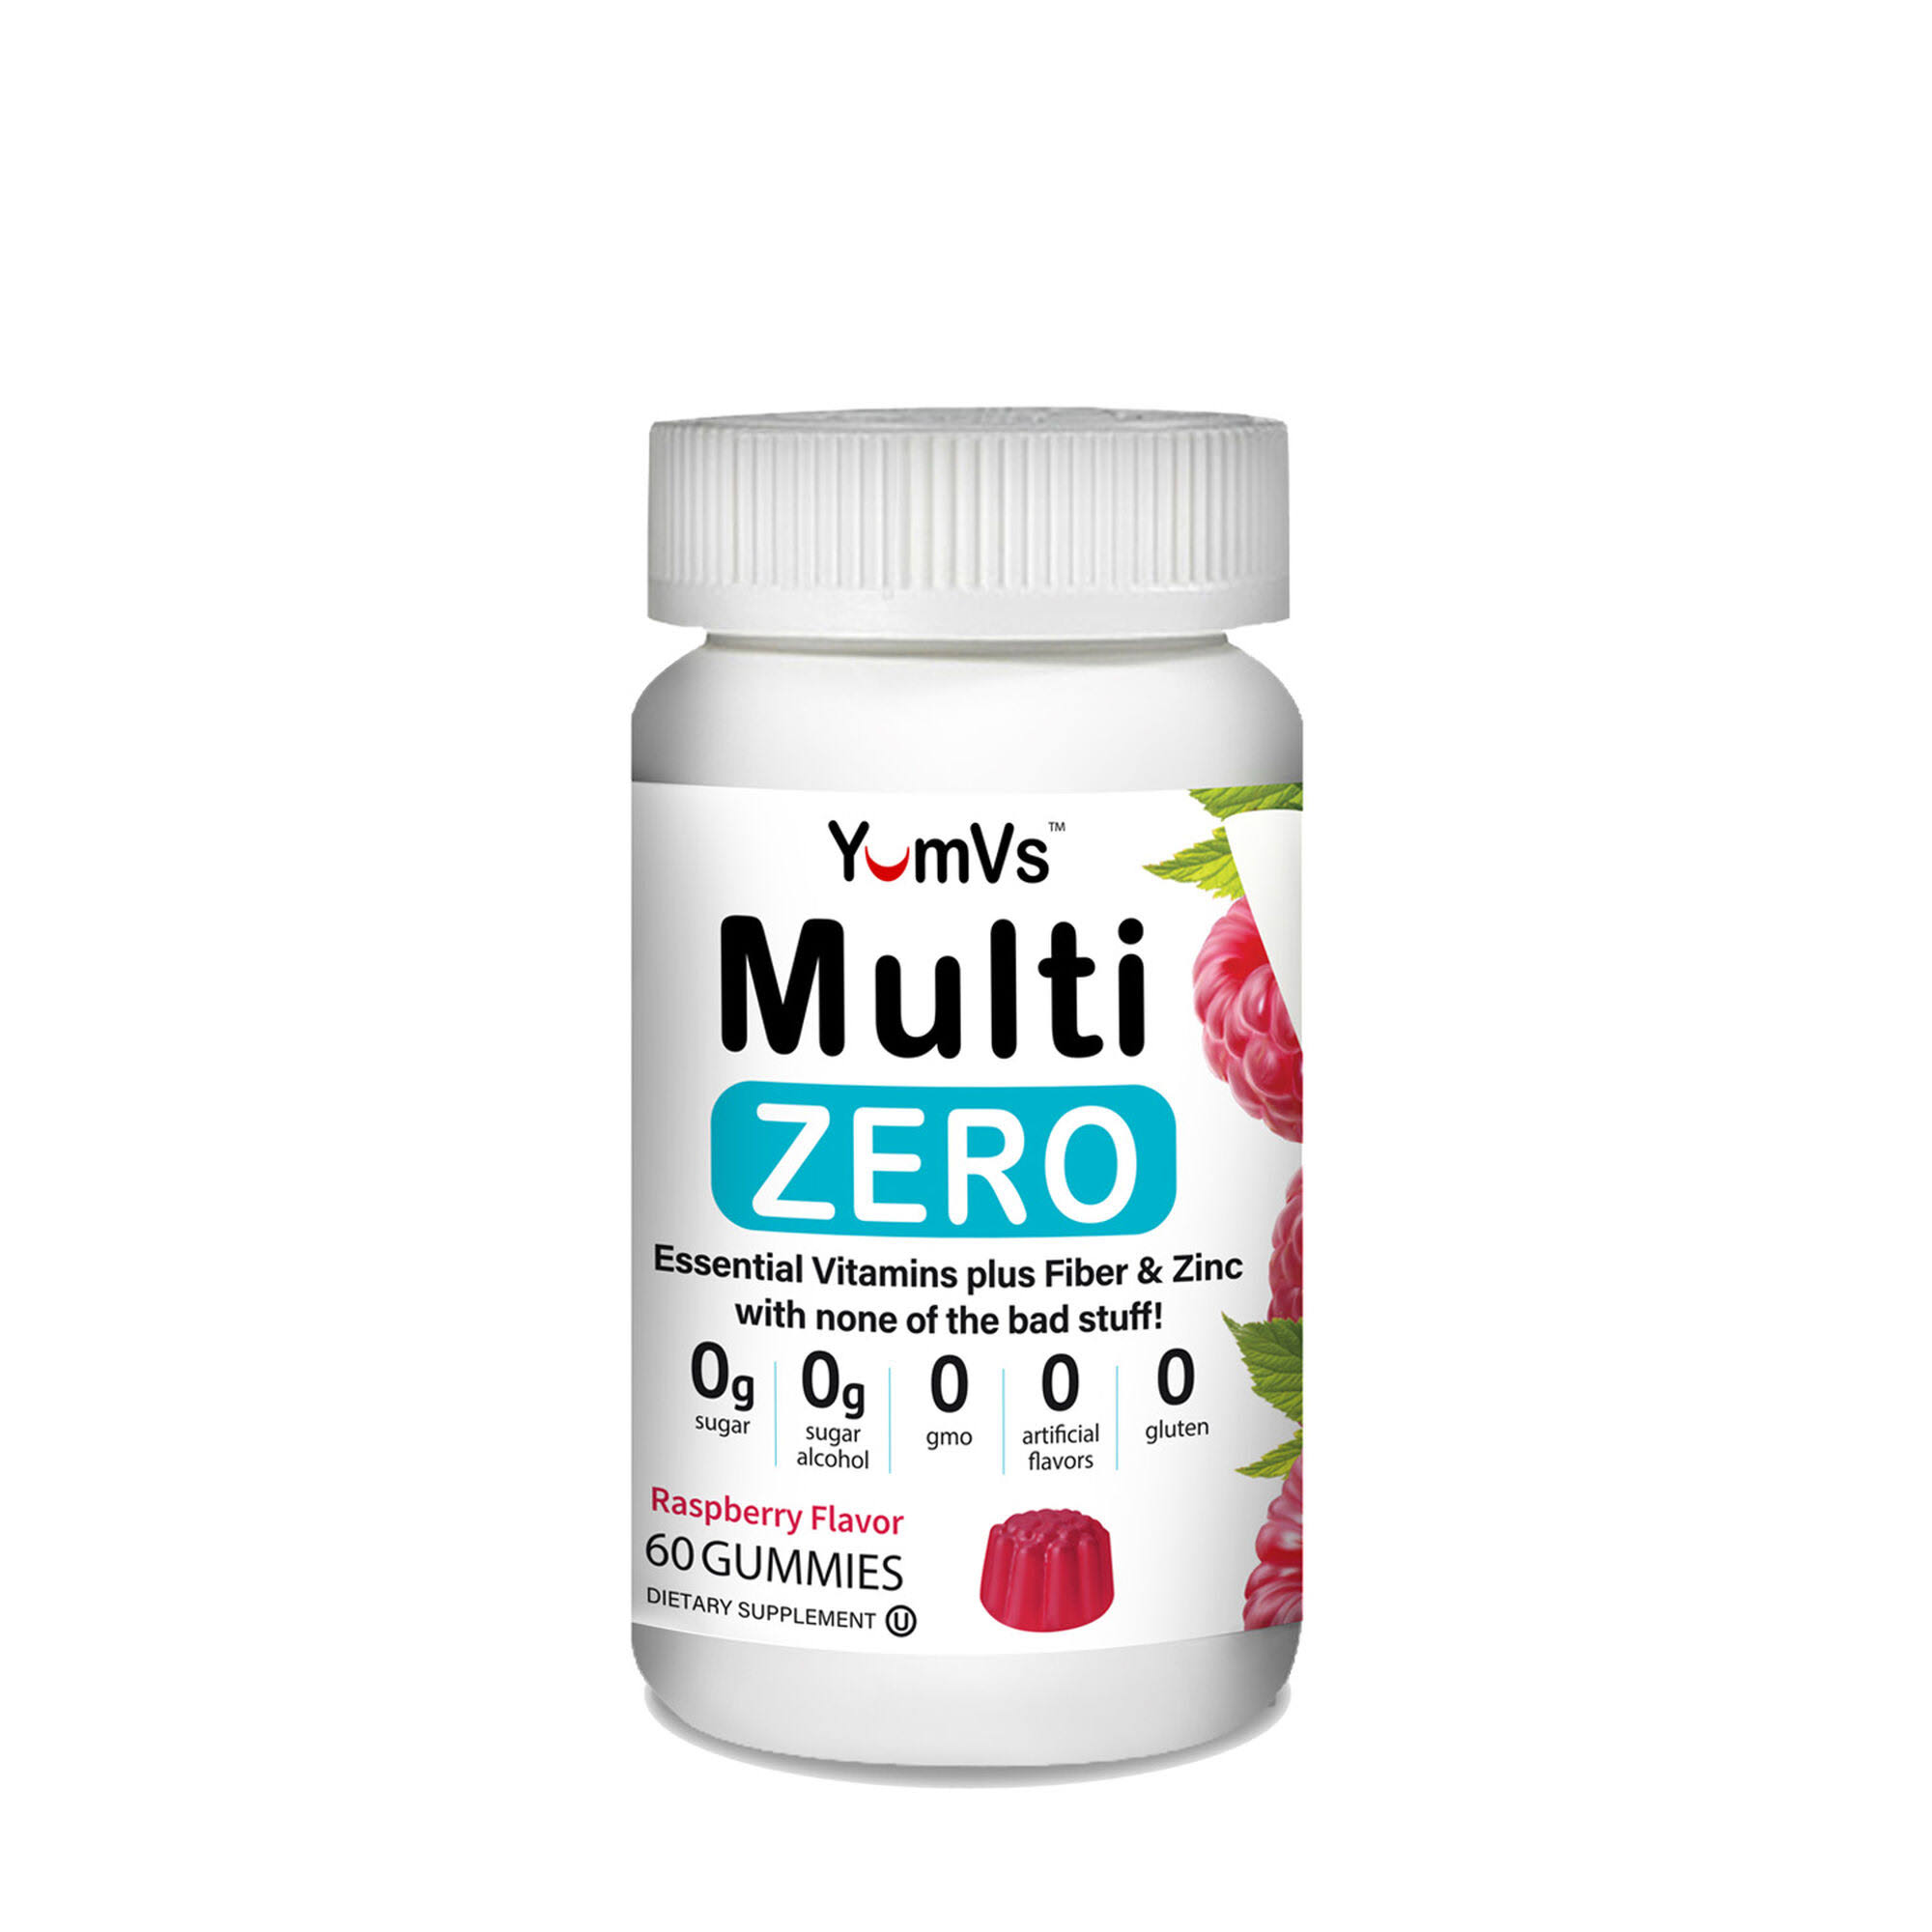 Yumvs Zero Multivitamin, Raspberry Flavor, Gummies - 60 gummies